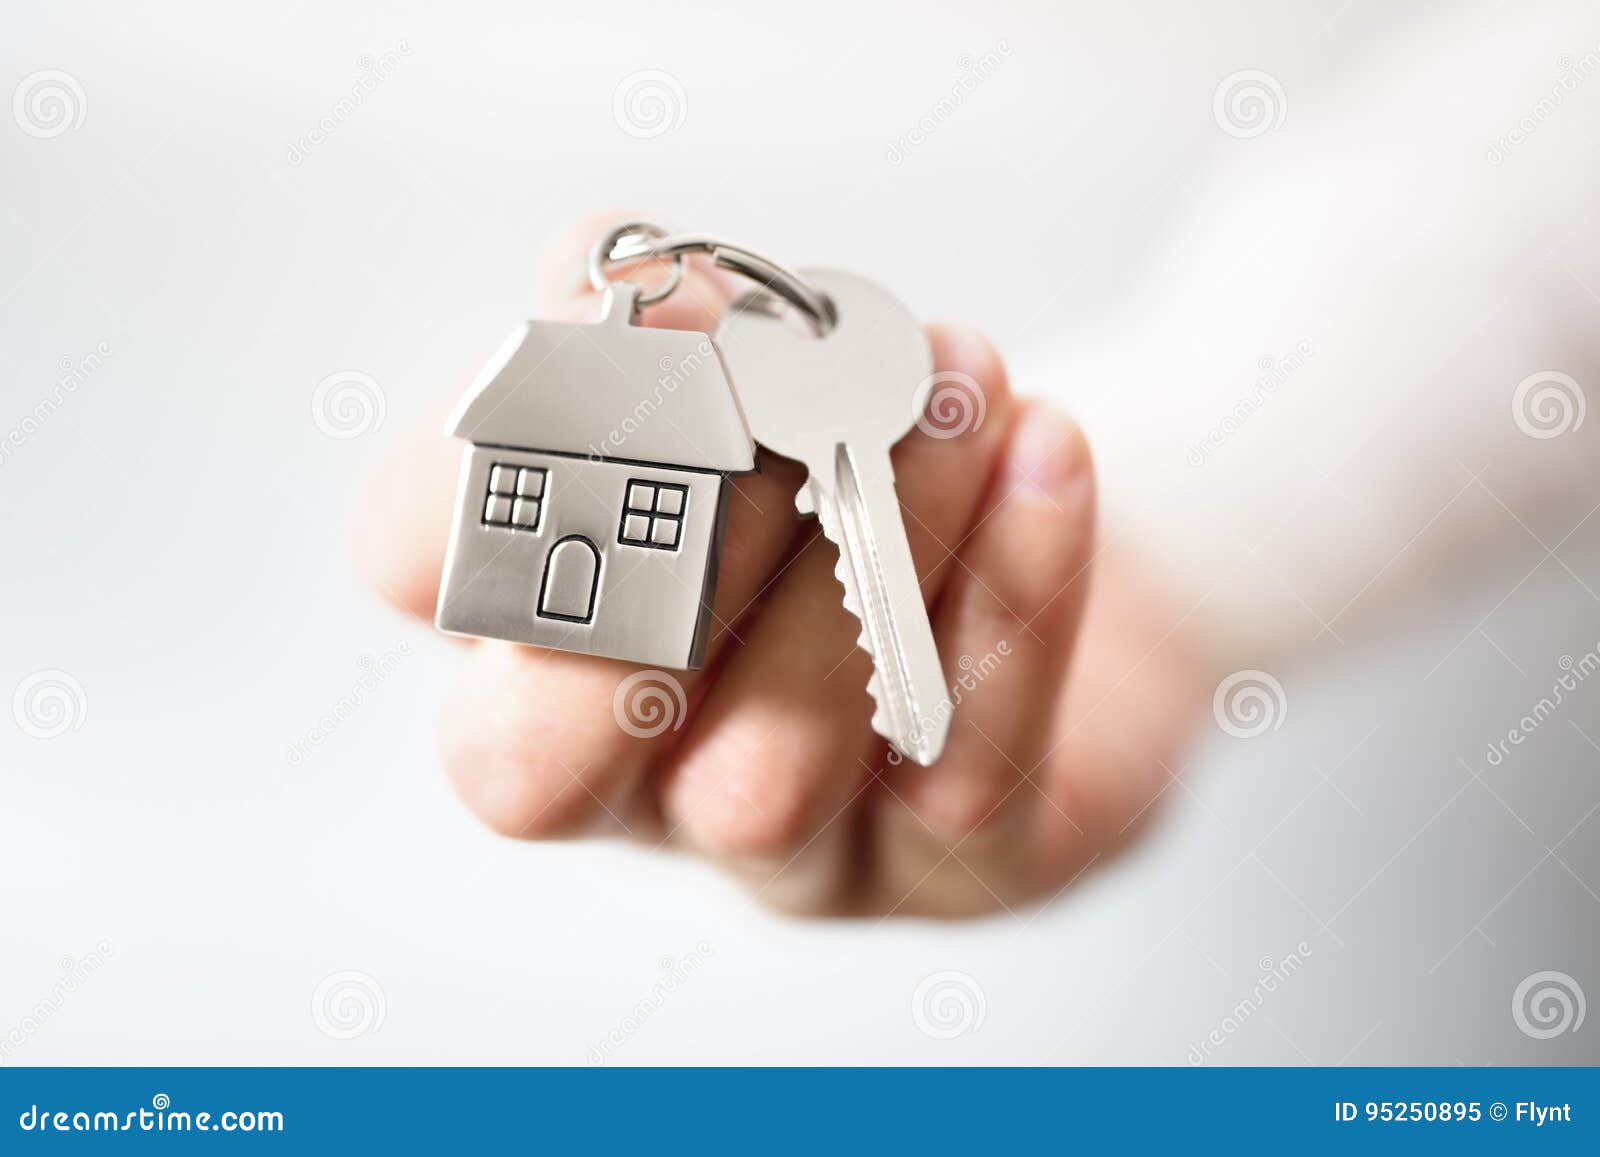 real estate agent giving house keys